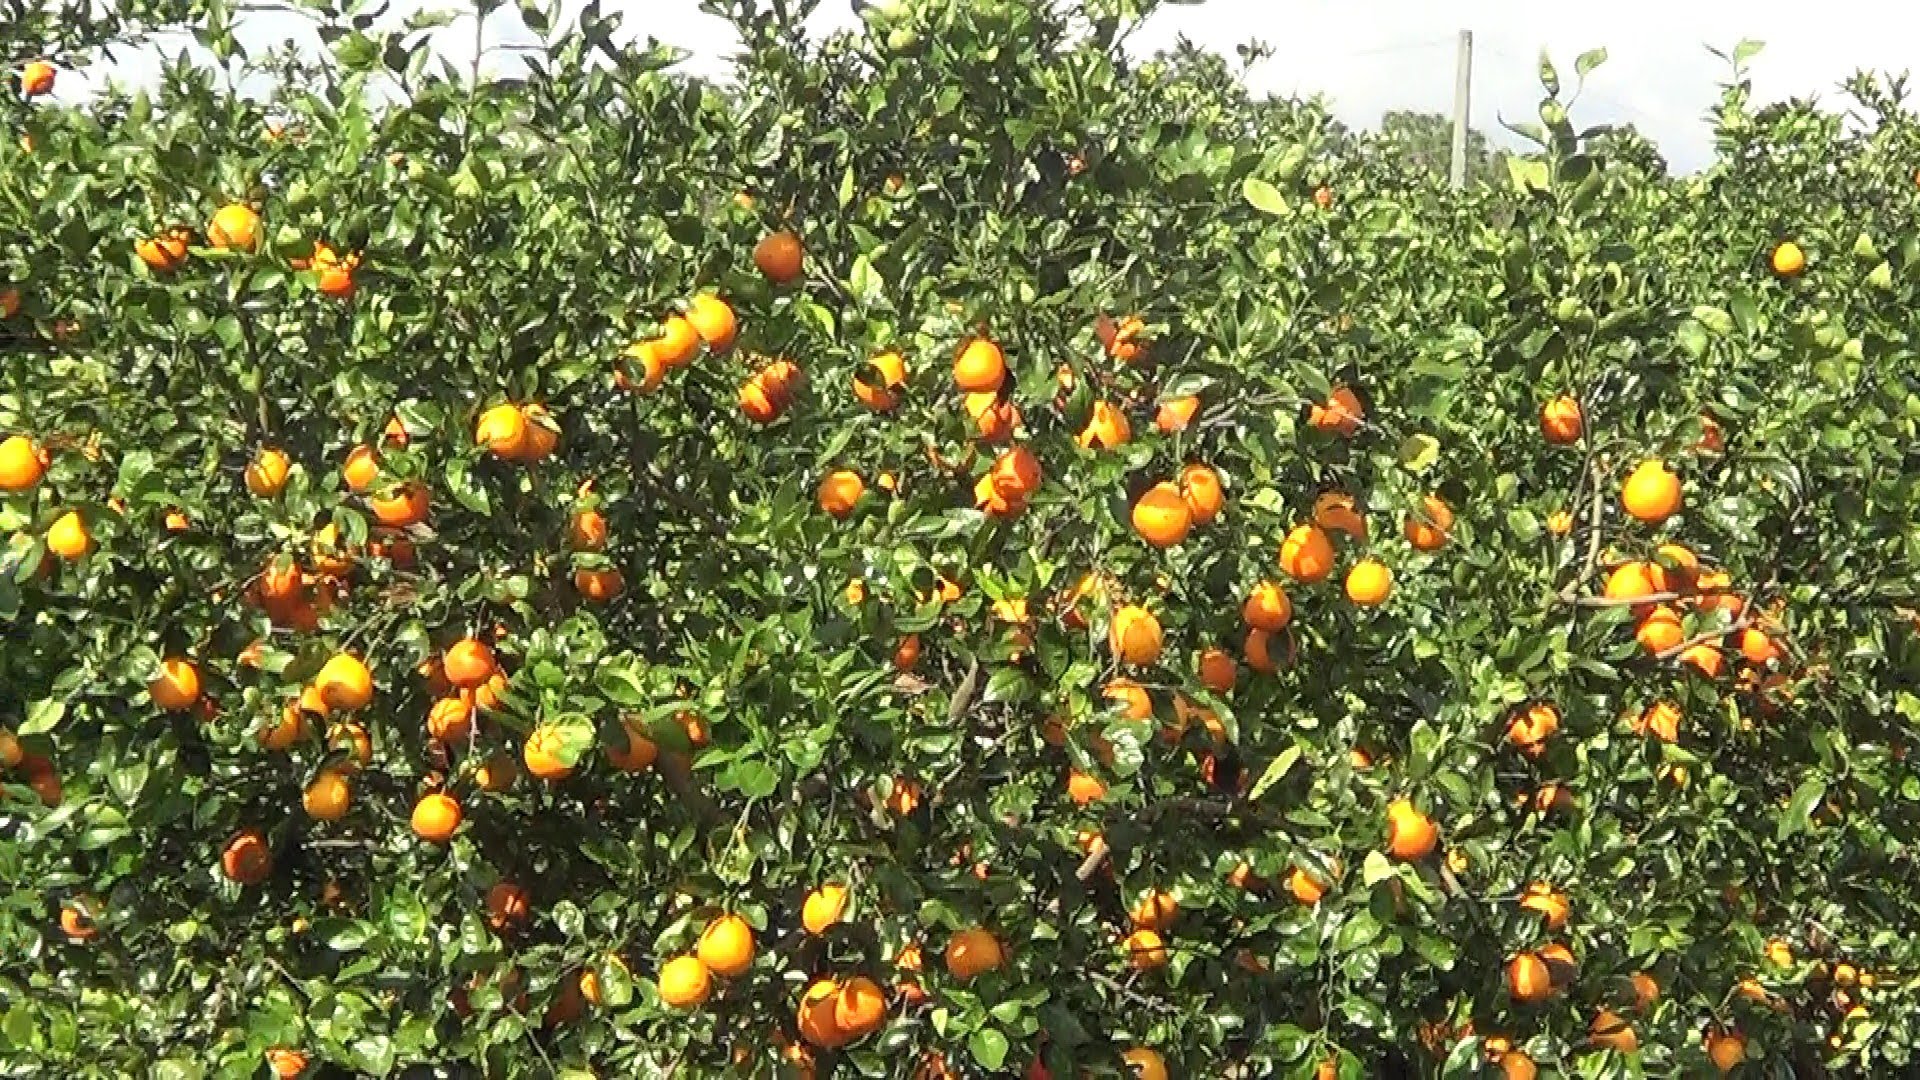 How to Start Orange and Lemon Farming in Nigeria